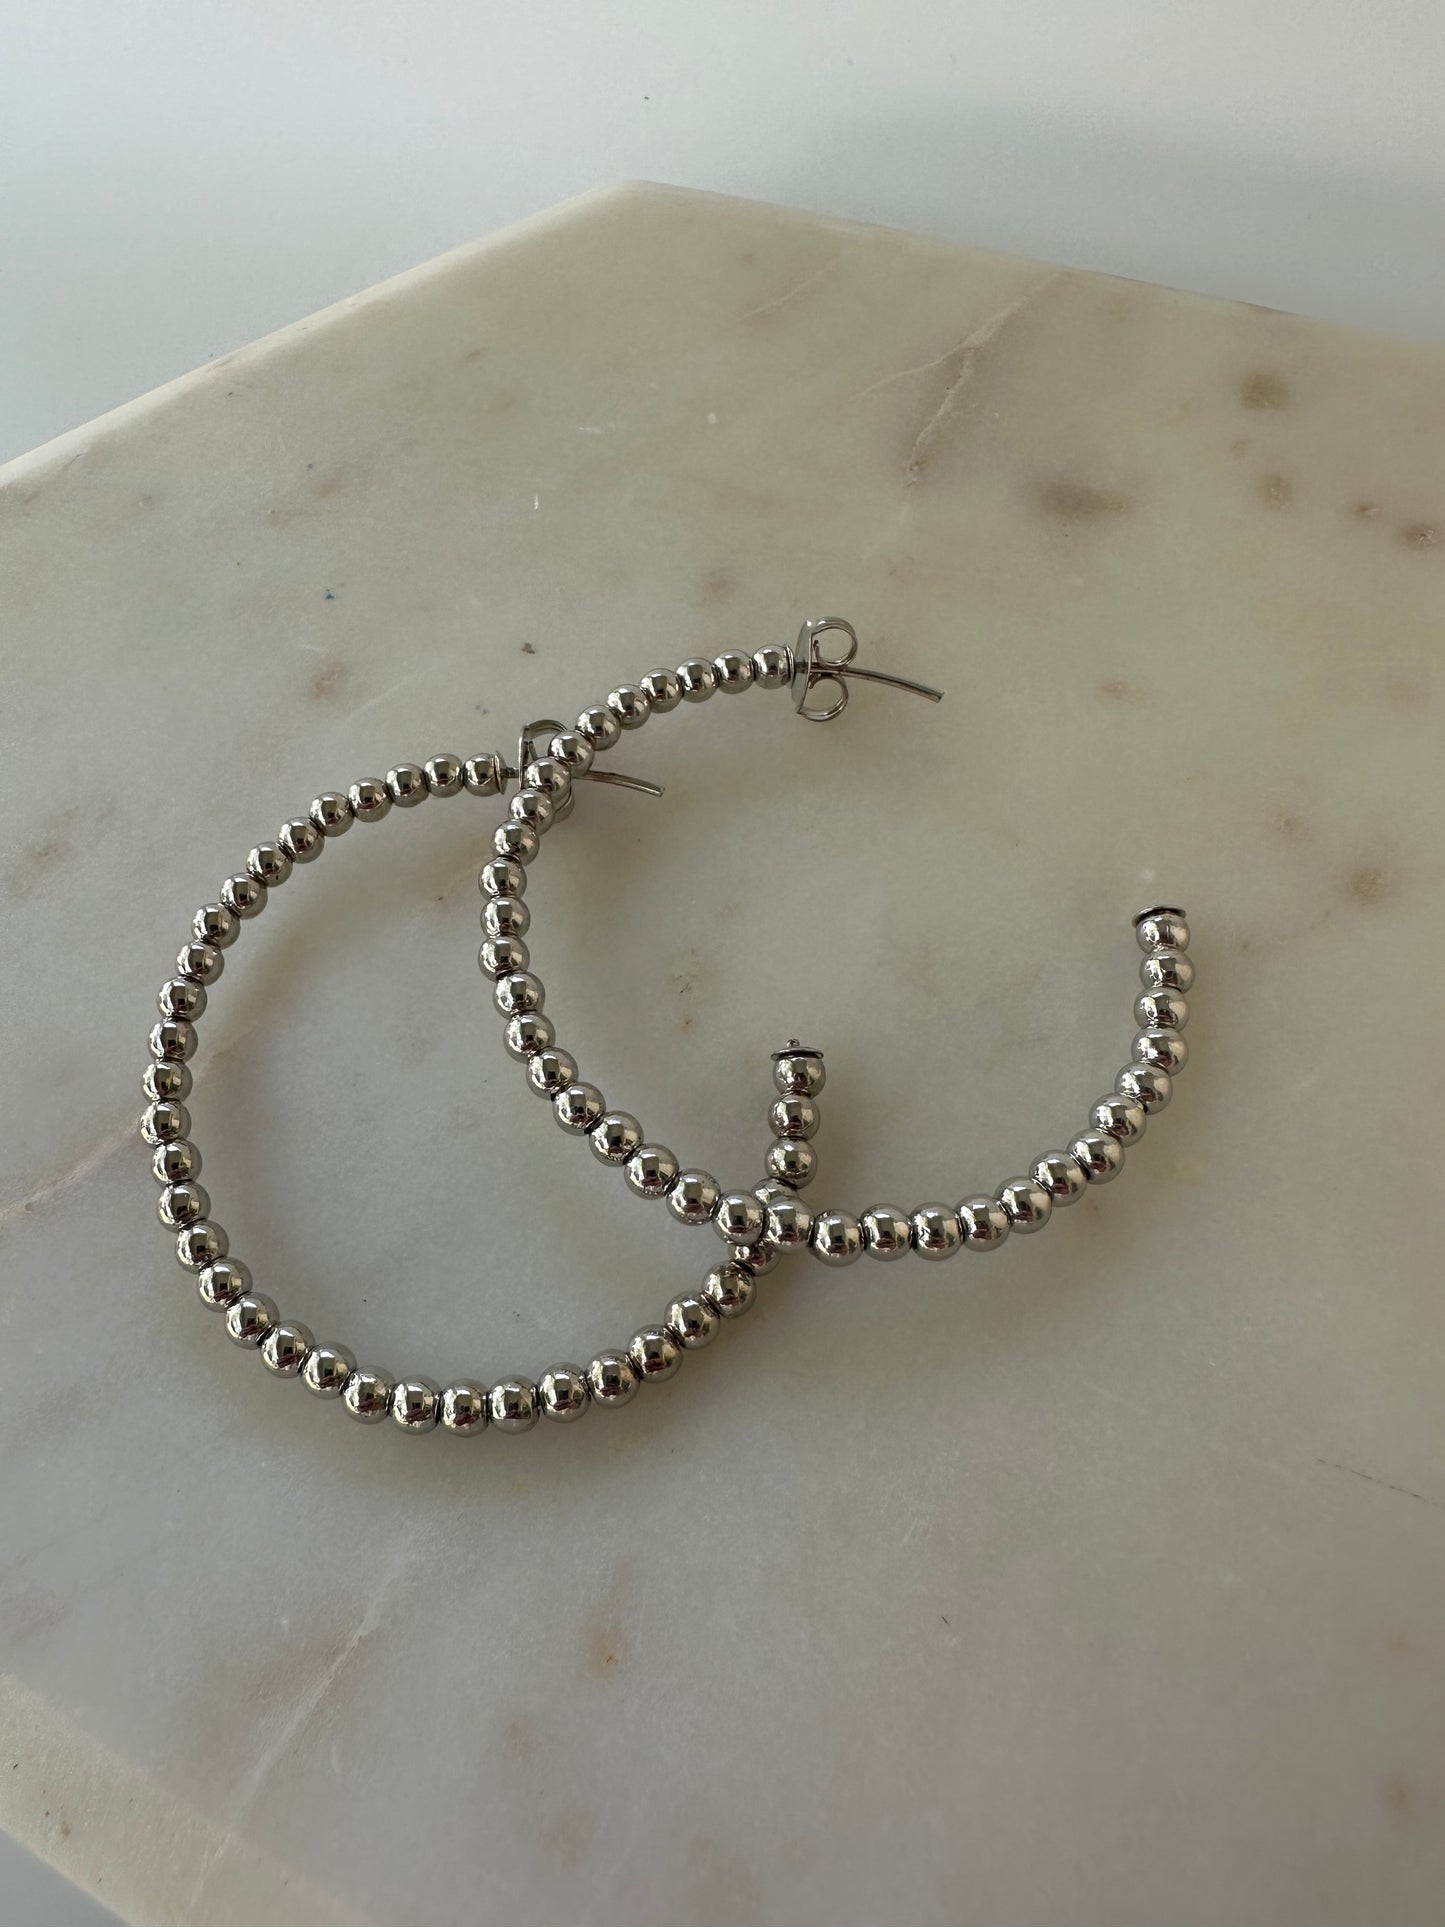 30mm Shimmer Beaded Hoop Earrings in Sterling Silver